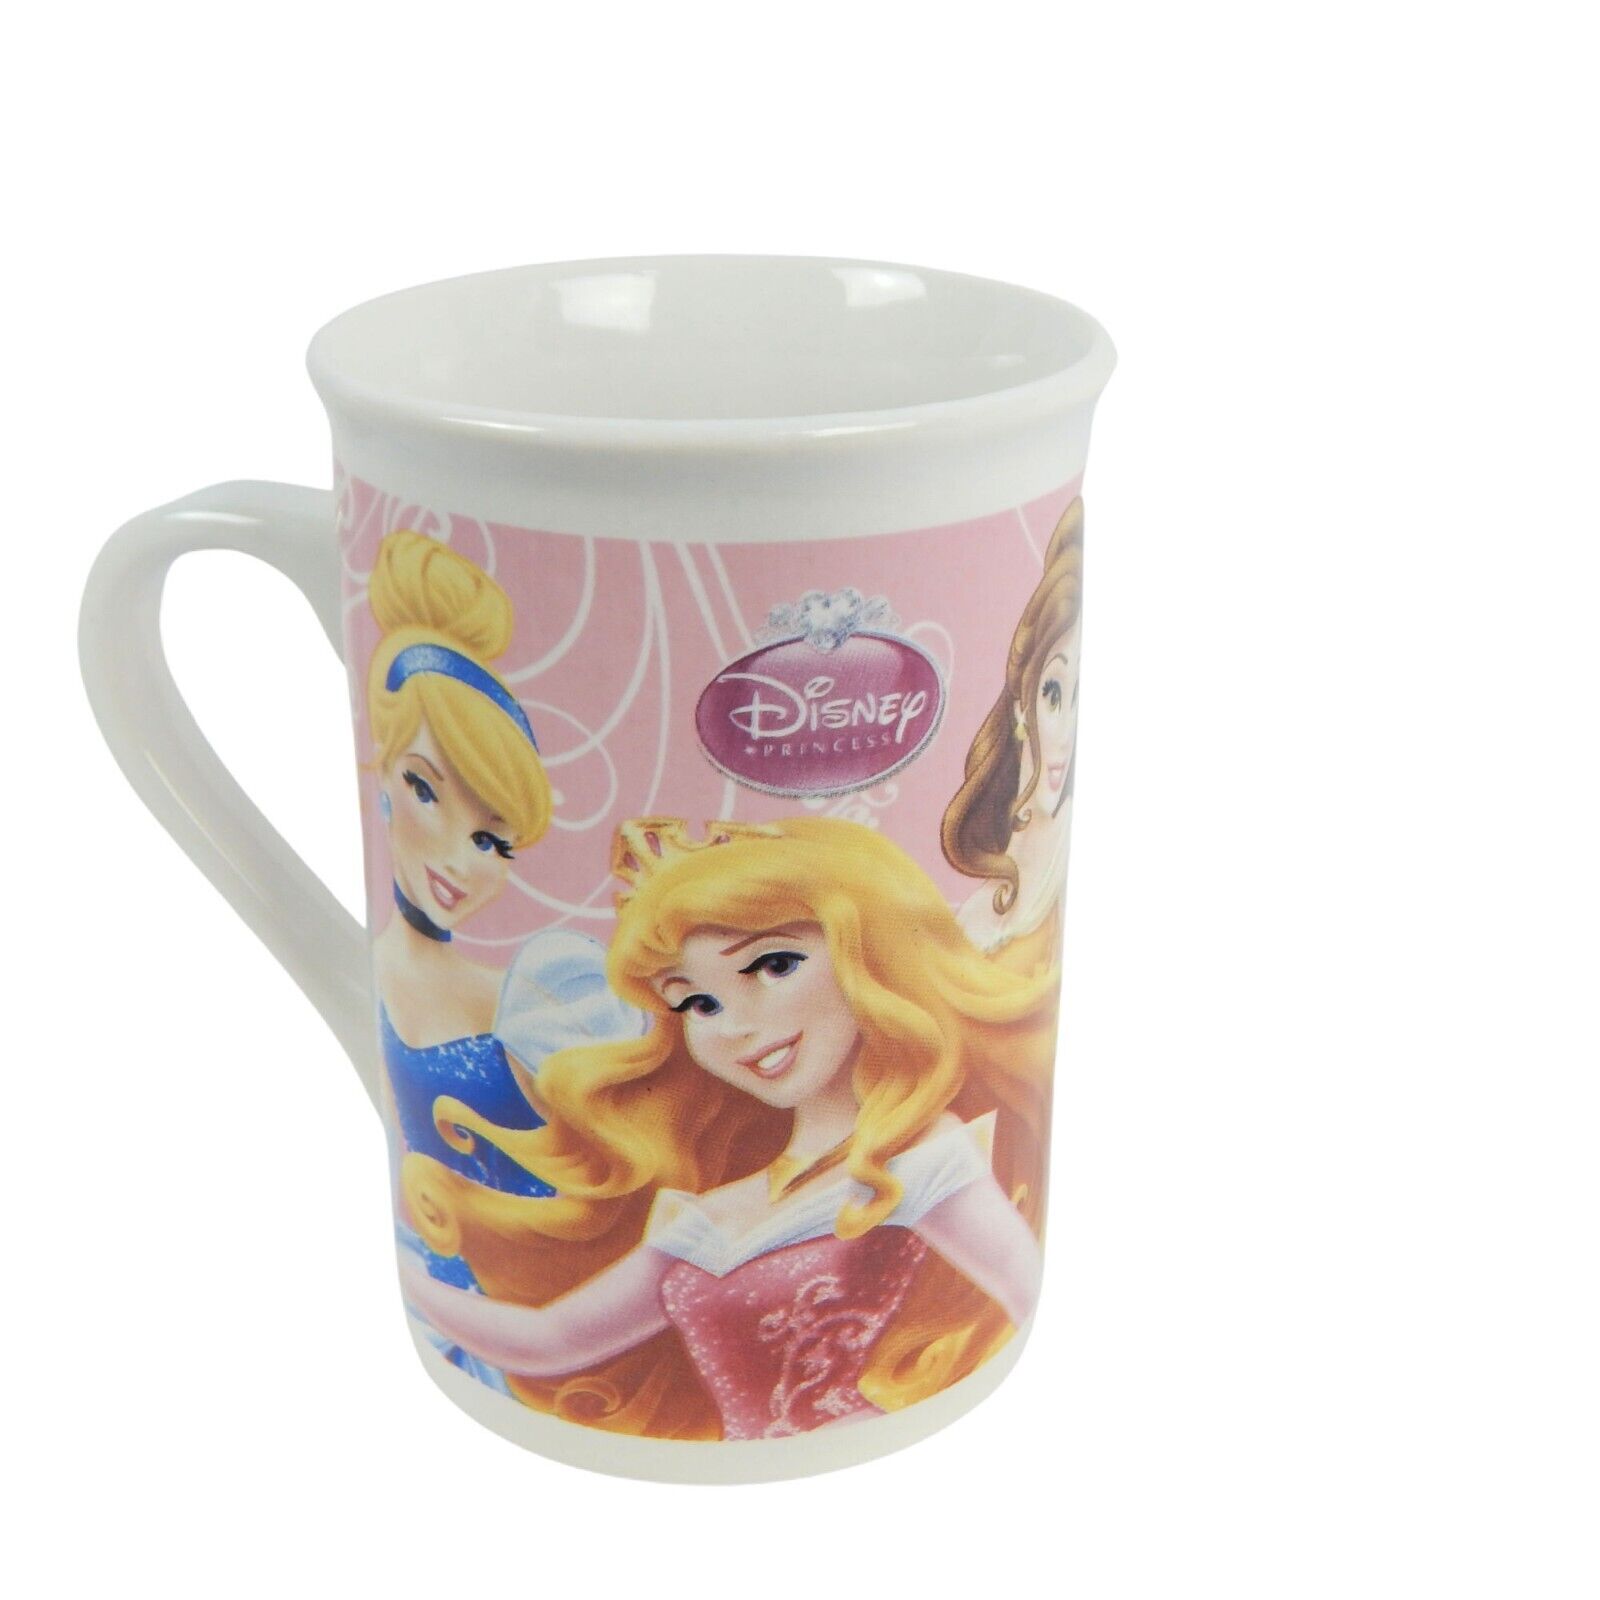 Vintage Disney Princess Coffee Mug Cup Cinderella Jasmine Ariel Belle Rapunzel